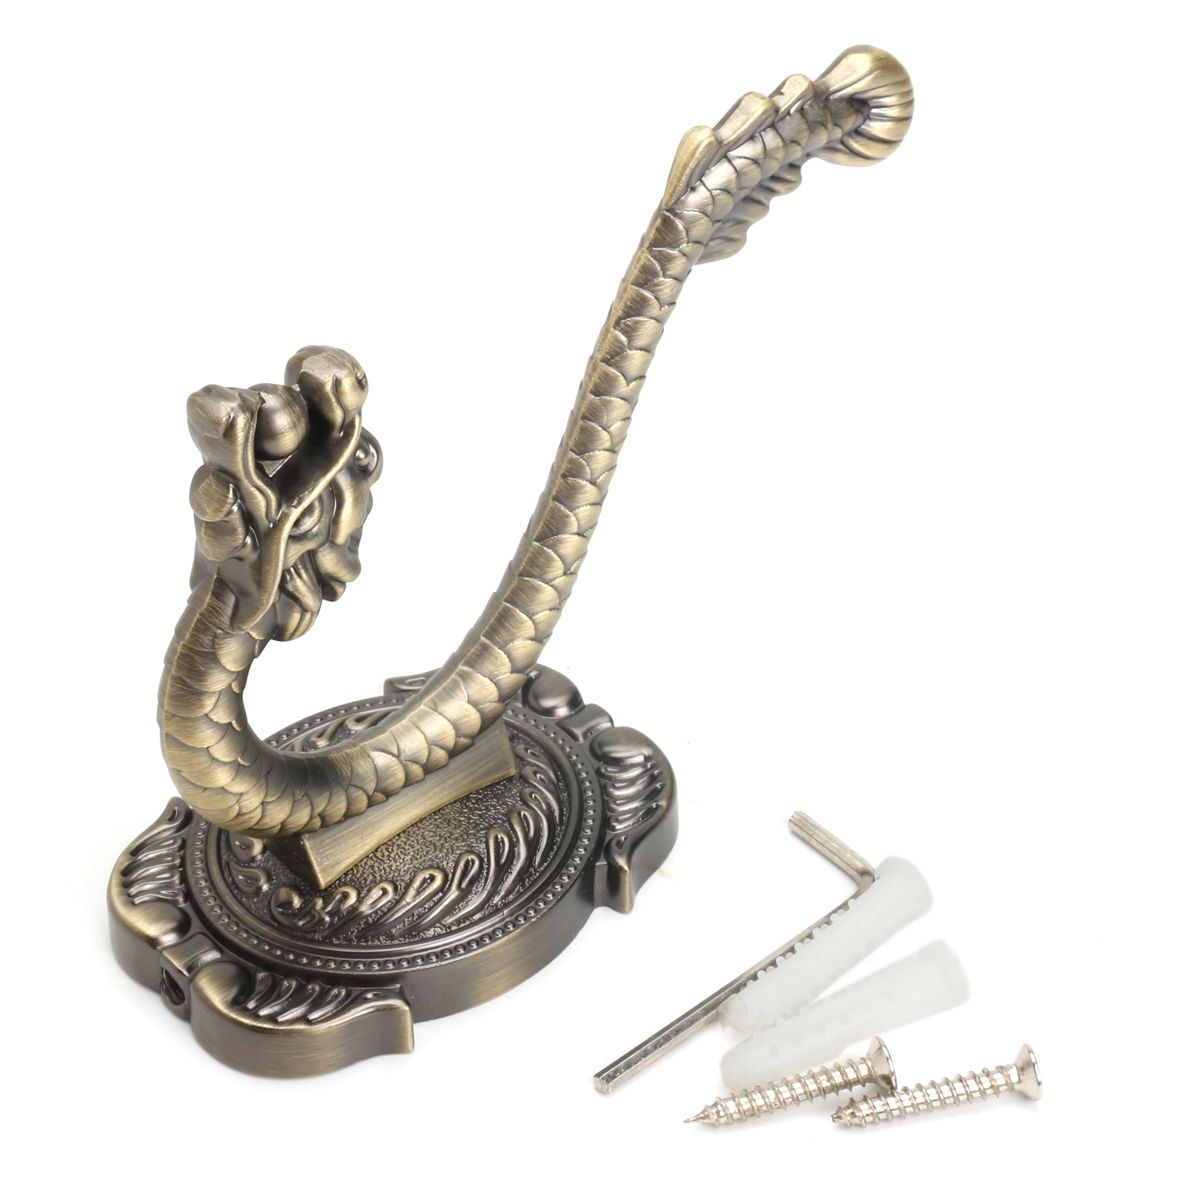 Antique-Brass-Dragon-Style-Bathroom-Towel-Hanger-Holder-Coat-Hat-Hook-Wall-Mount-1290866